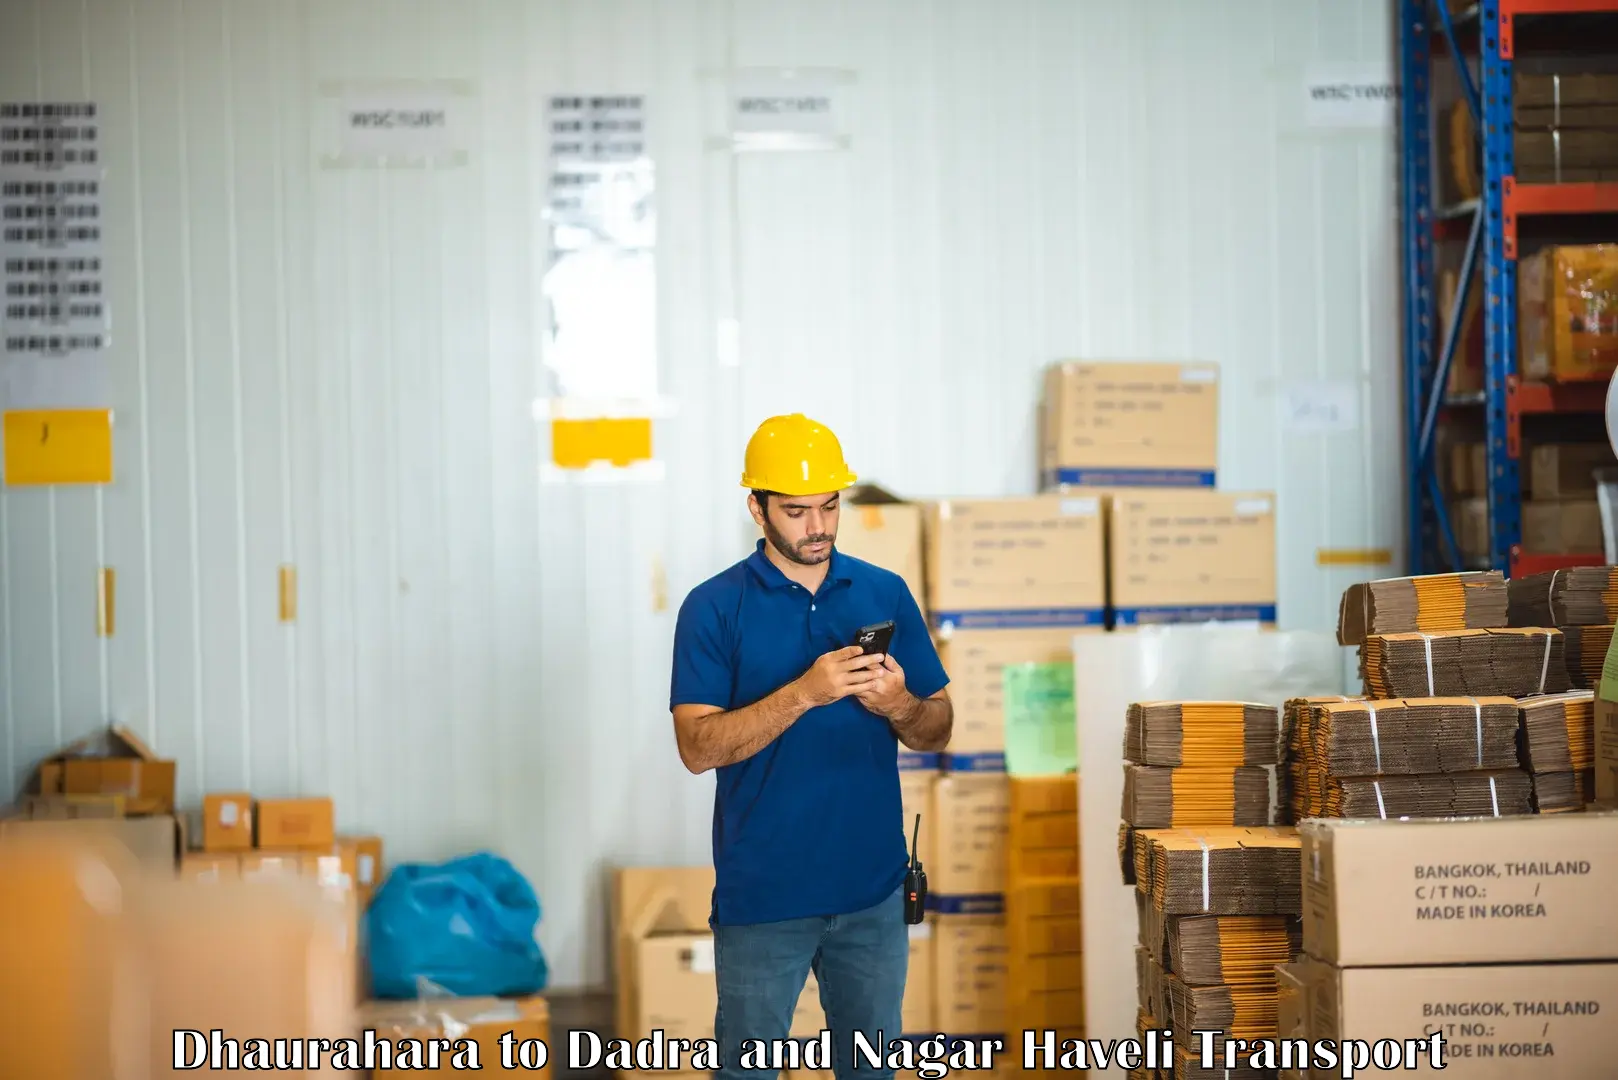 India truck logistics services Dhaurahara to Silvassa